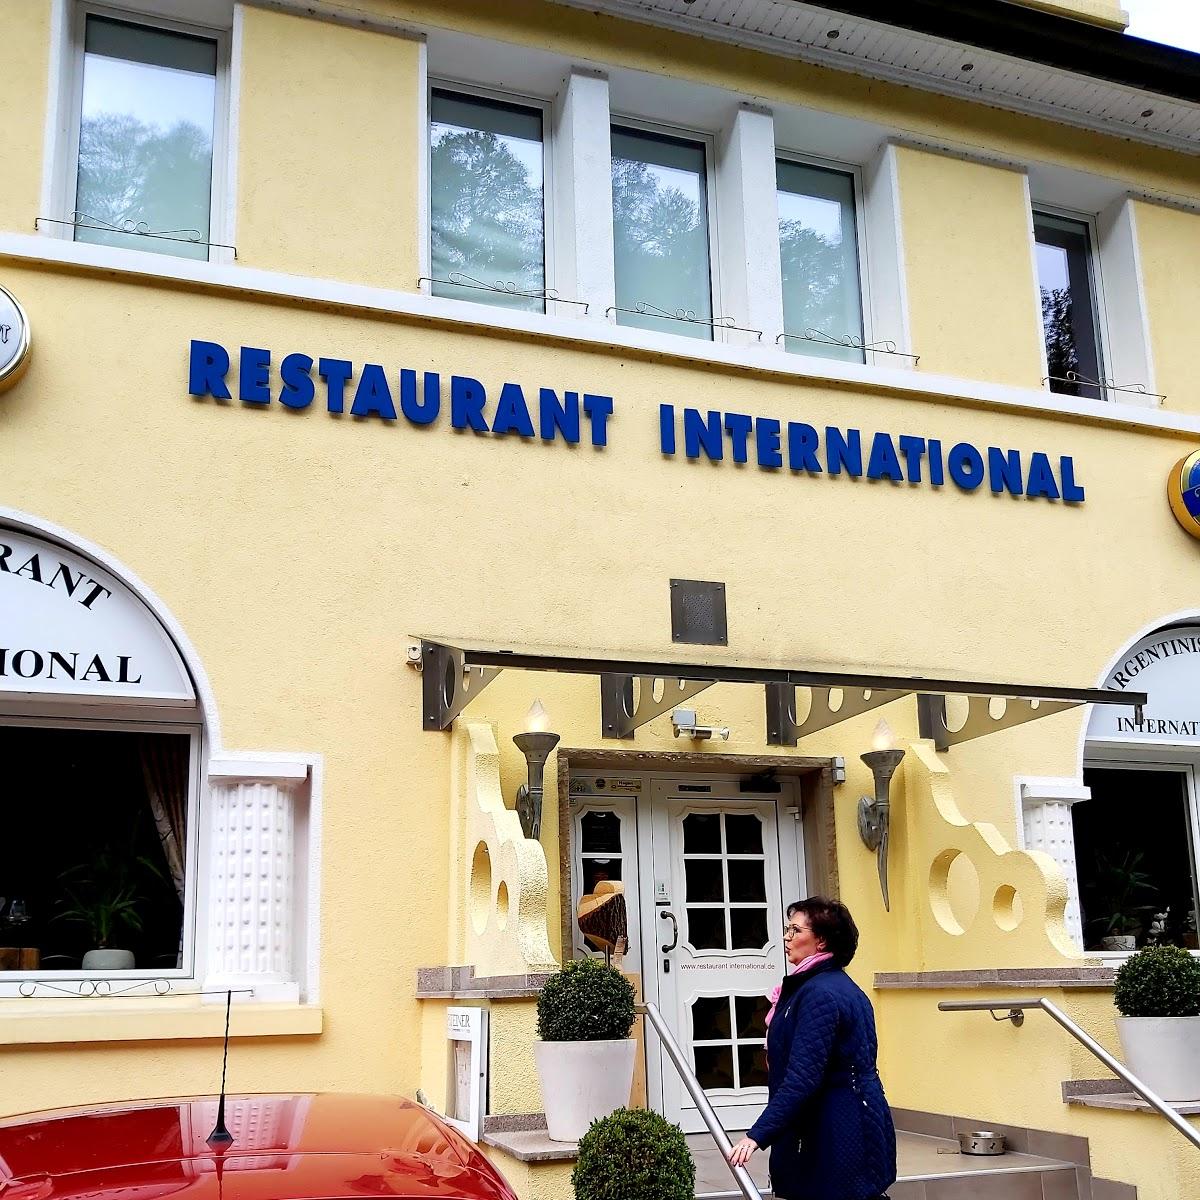 Restaurant "Hotel Restaurant International" in  Hagen